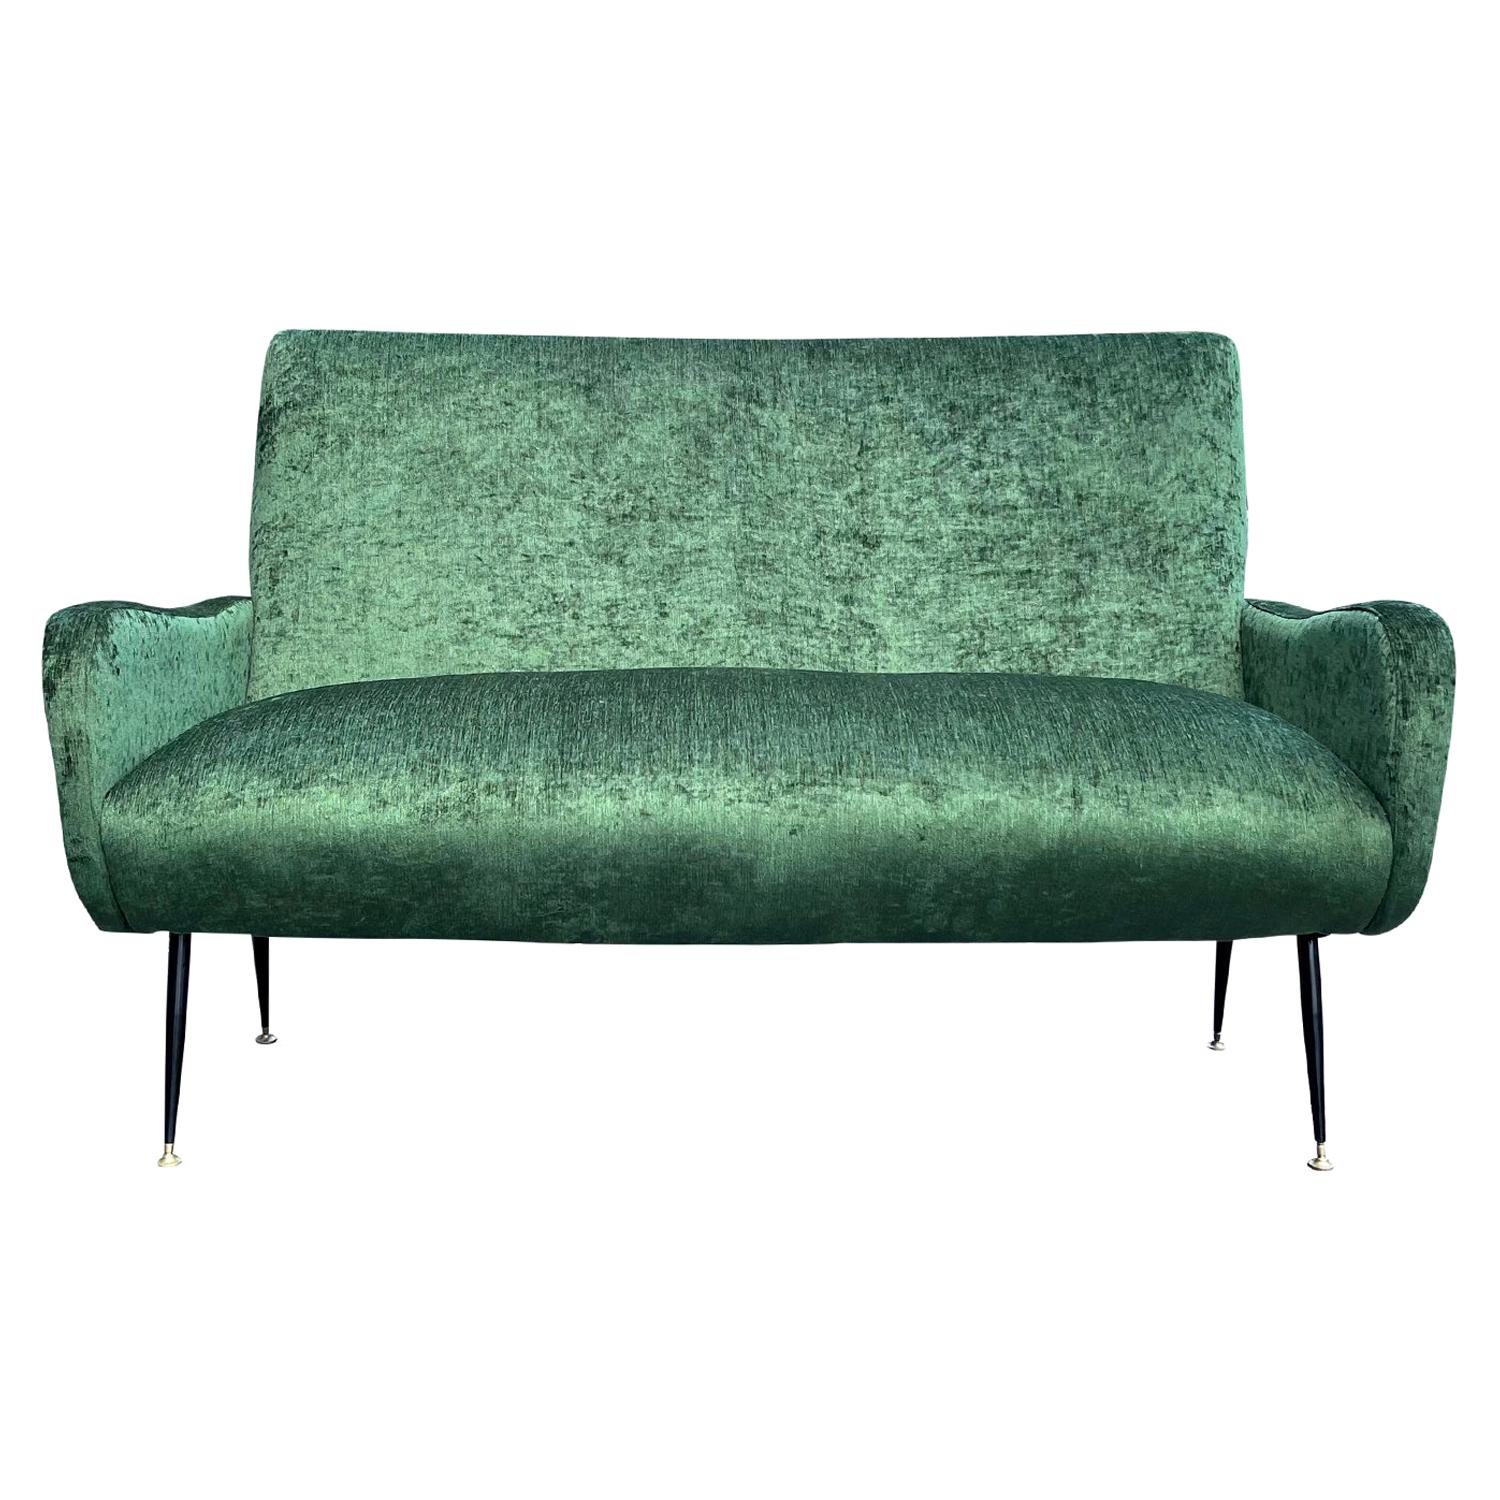 20th Century Green Italian Small Two Seater Sofa, Iron Settee by Marco Zanuso